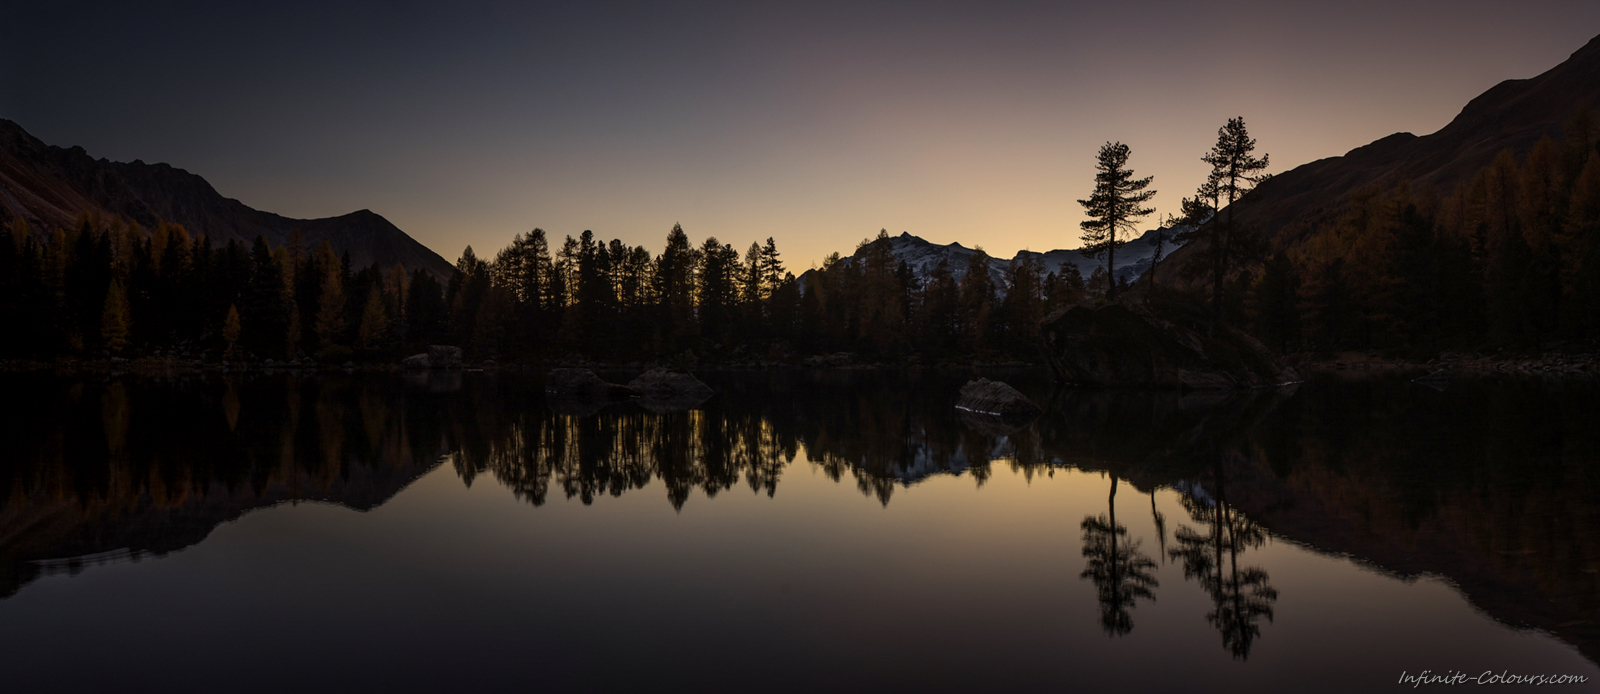 Lagh da Saoseo twilight Val Campo Sonnenuntergang Fotografie Photography Langzeitbelichtung Schweiz Bernina